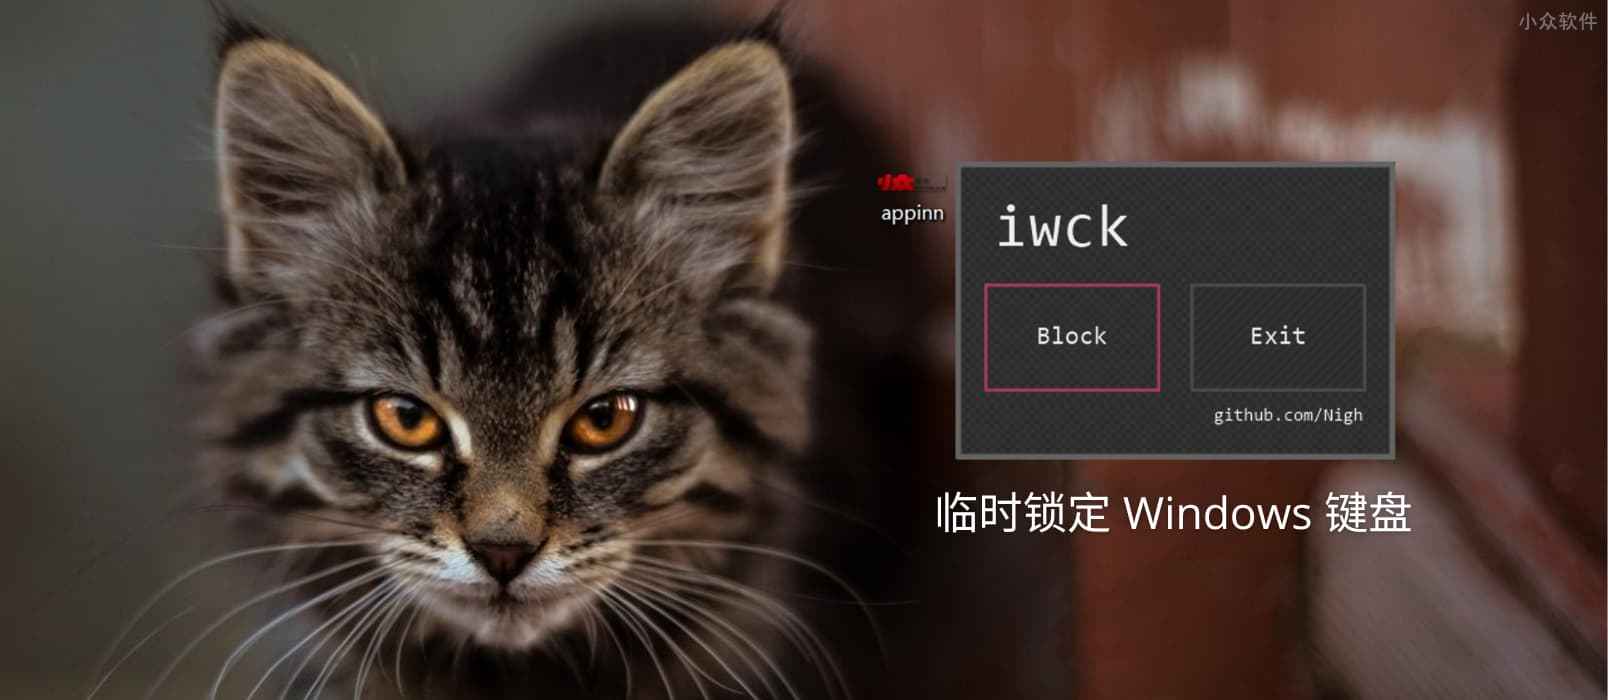 iwck - 临时锁定 Windows 键盘：优雅的清洁键盘